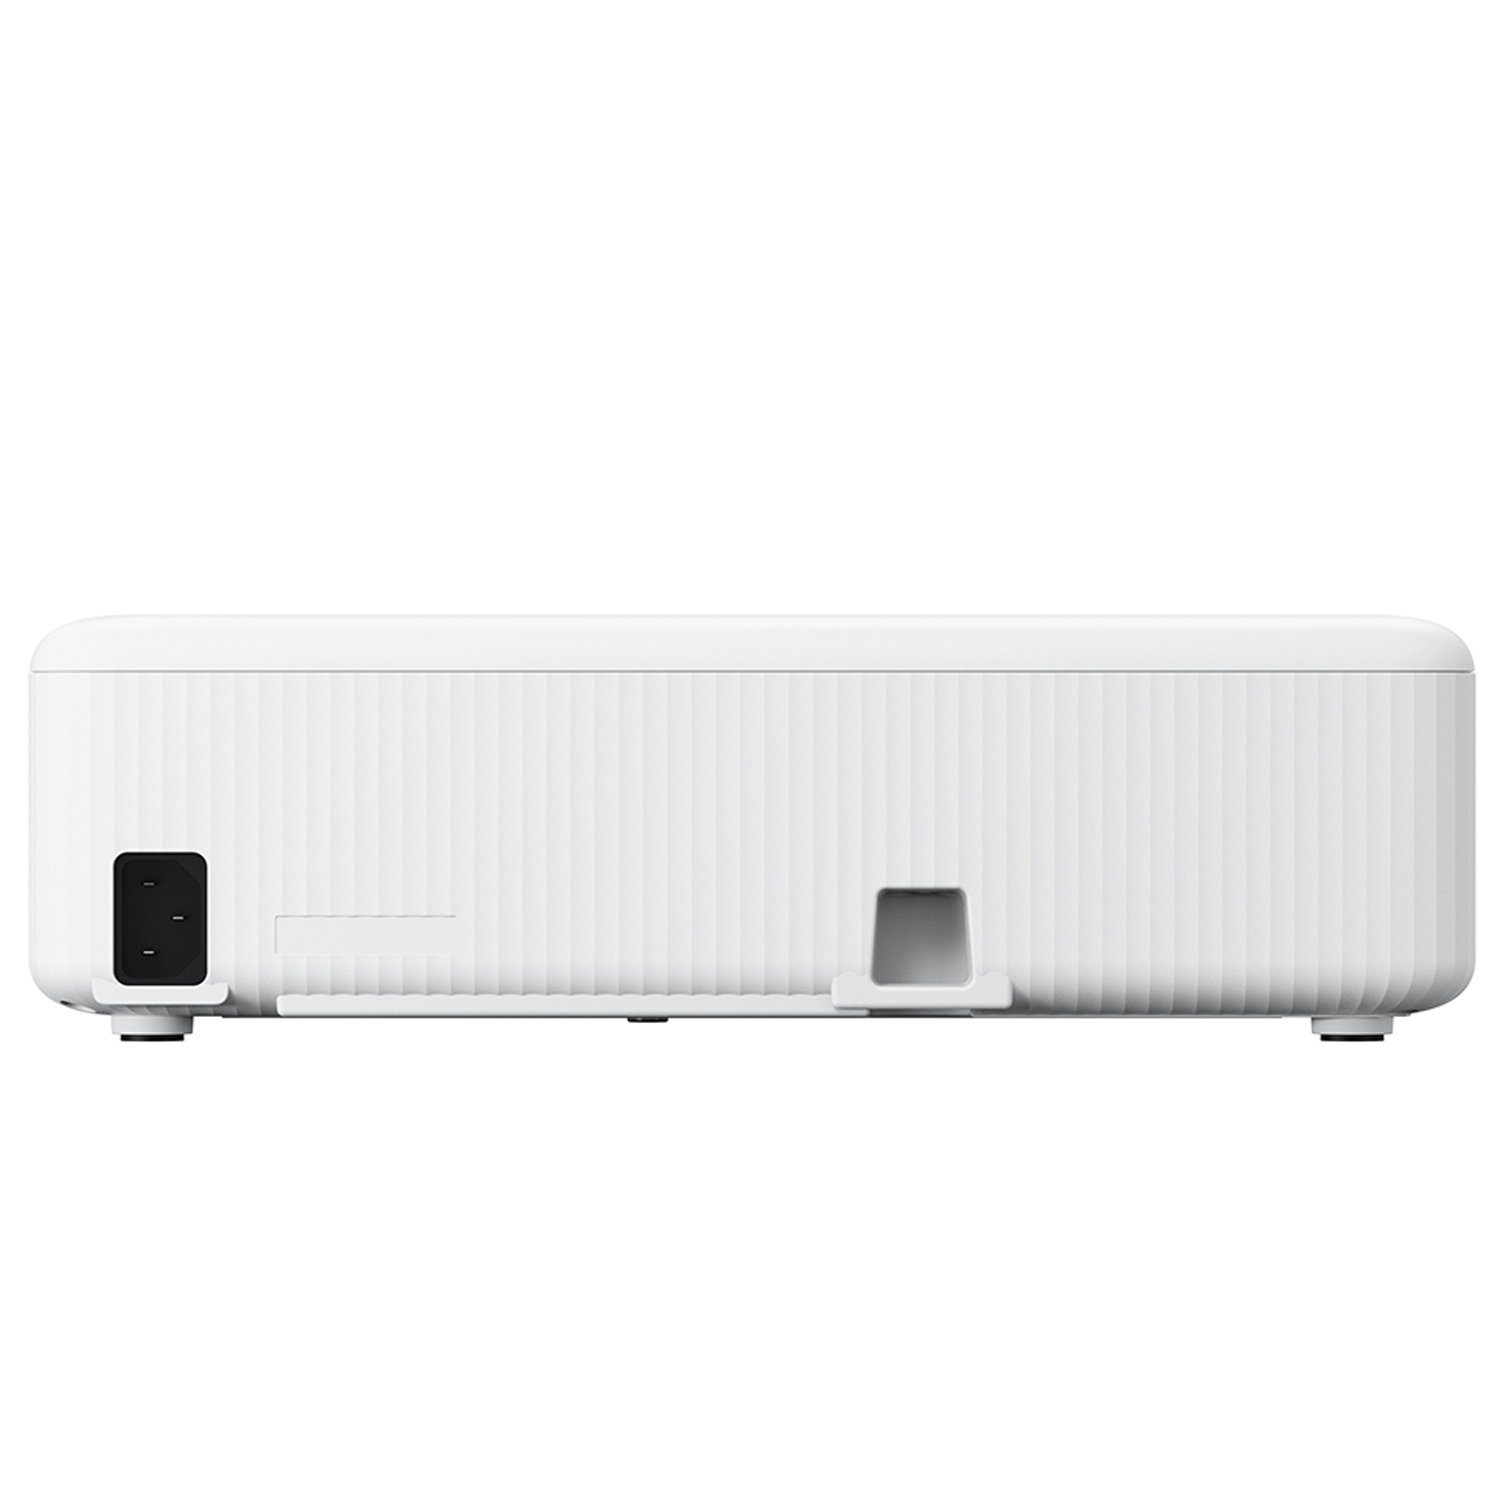 CO-W01 (3000 1280 x 720 Epson Projektor lm, Portabler px) :1,